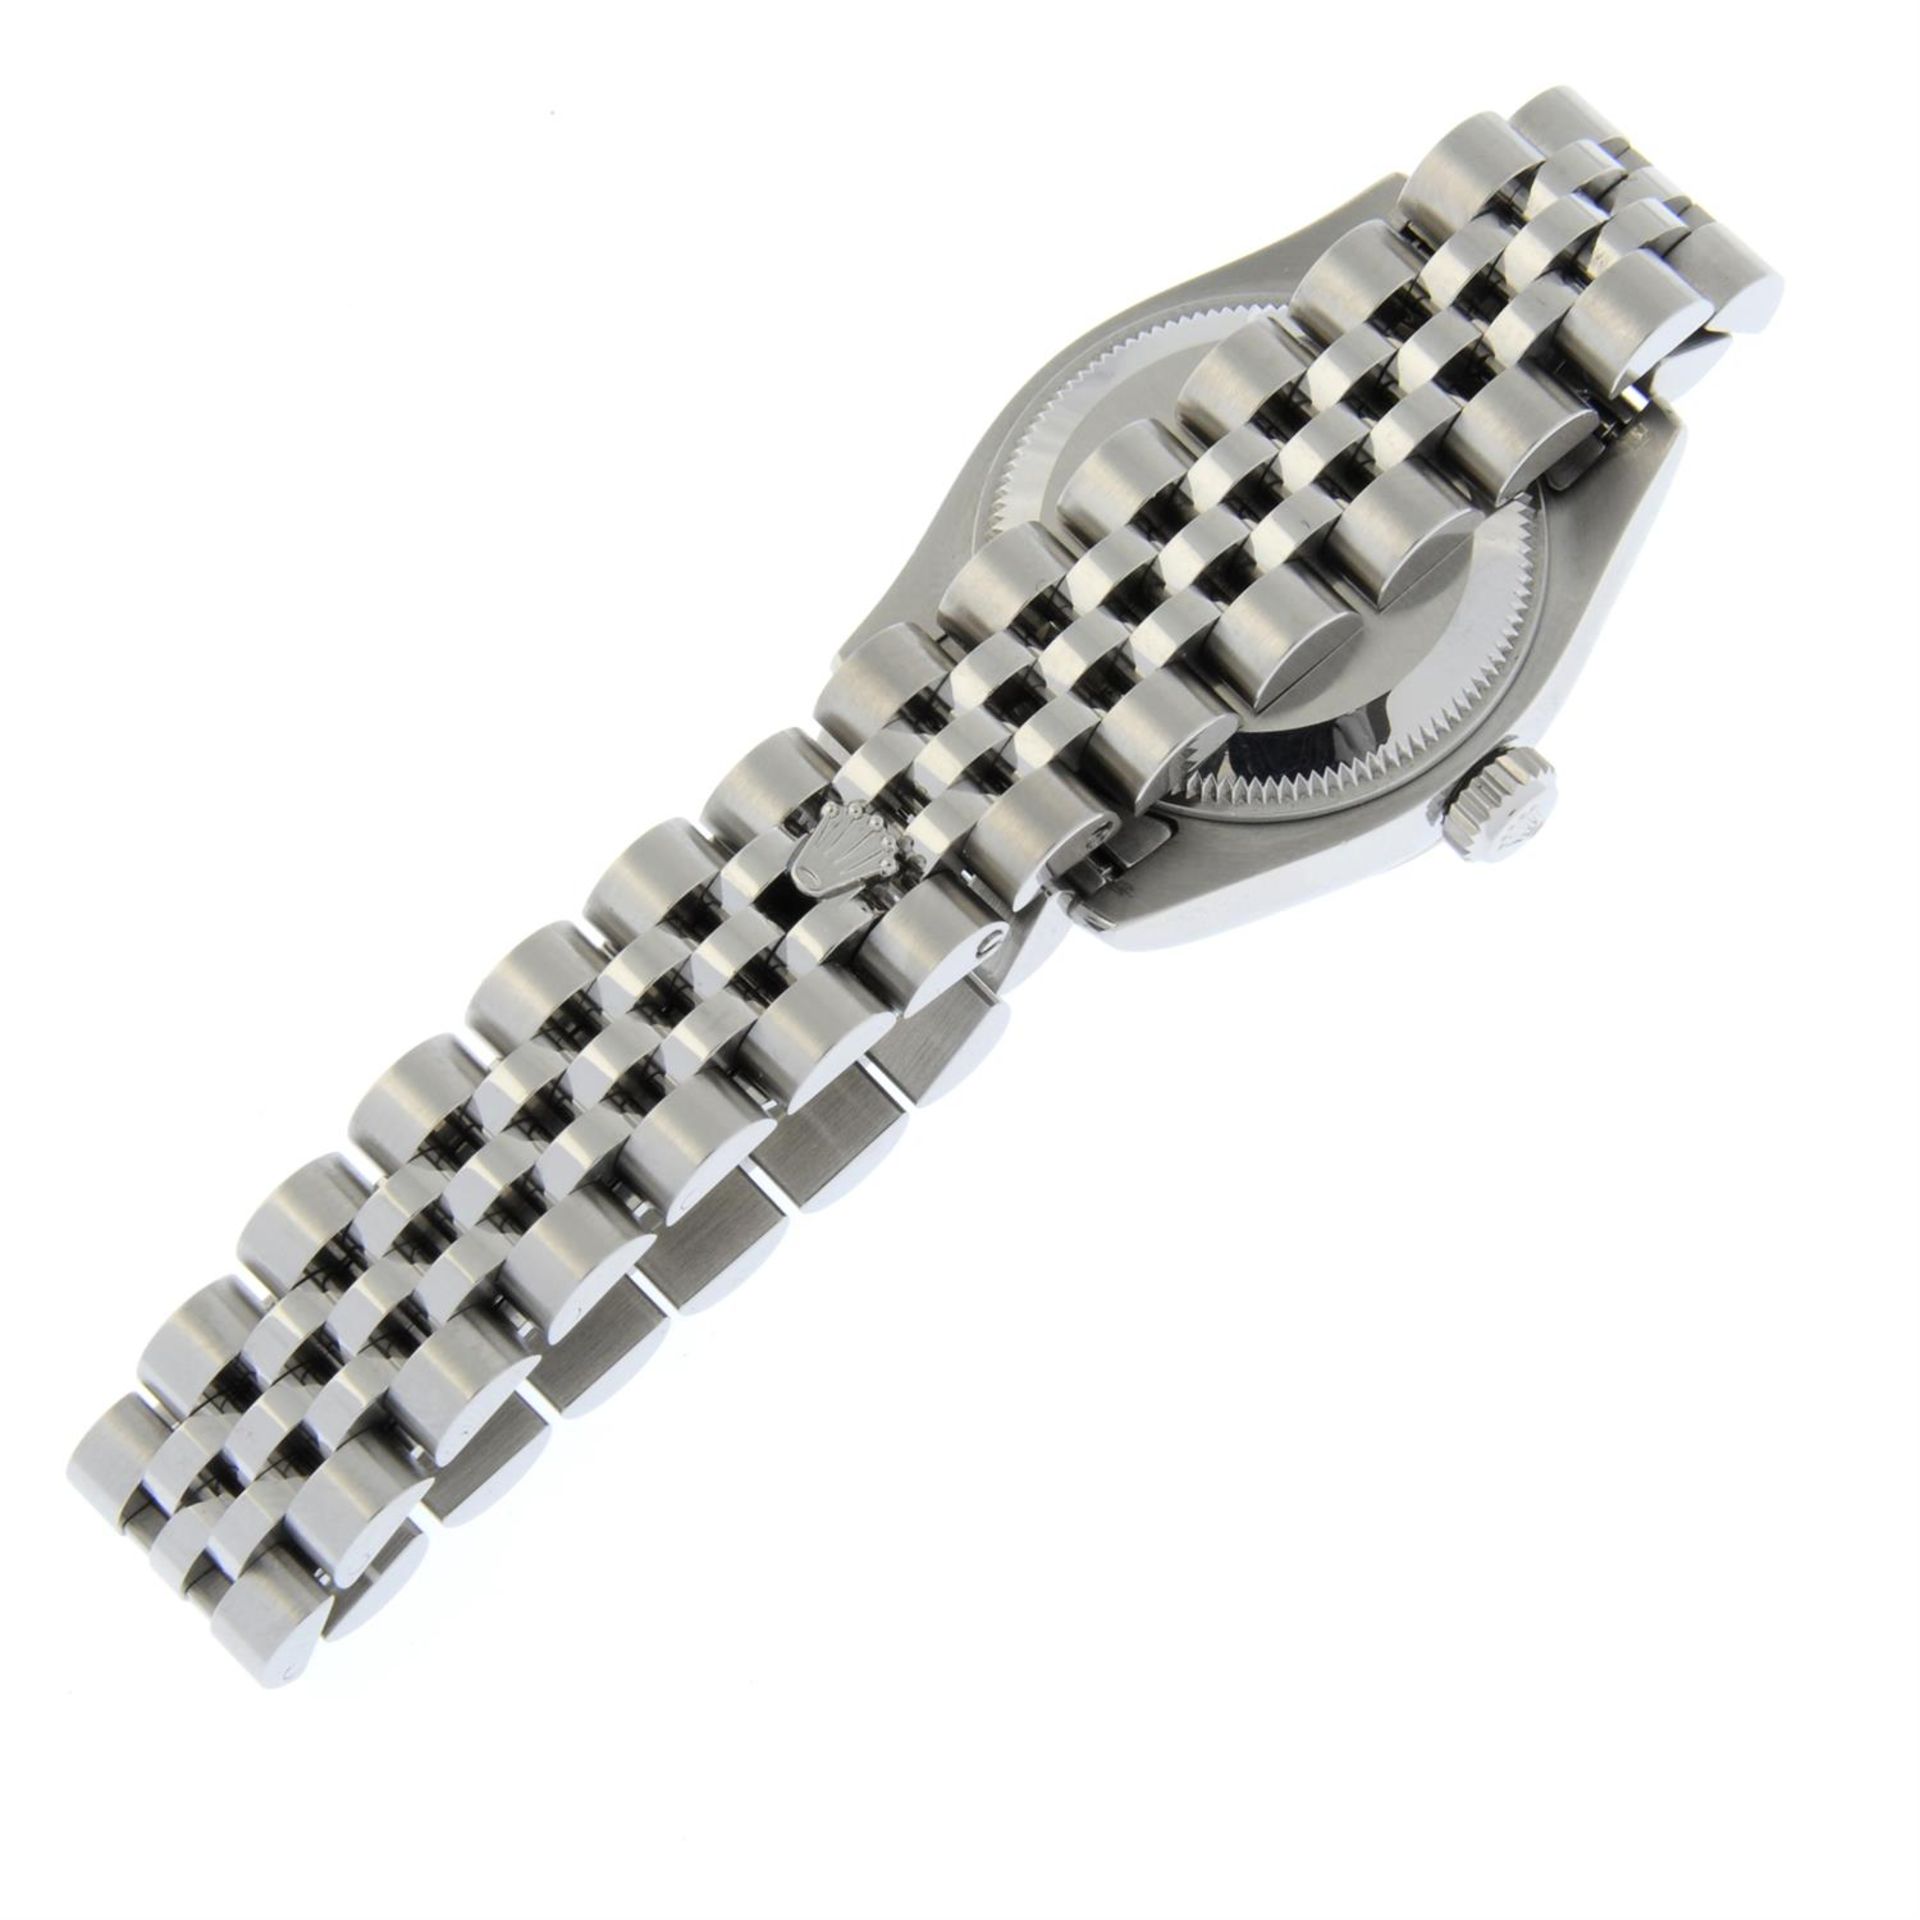 ROLEX - a bi-metal Oyster Perpetual Datejust bracelet watch, 26mm. - Image 2 of 5